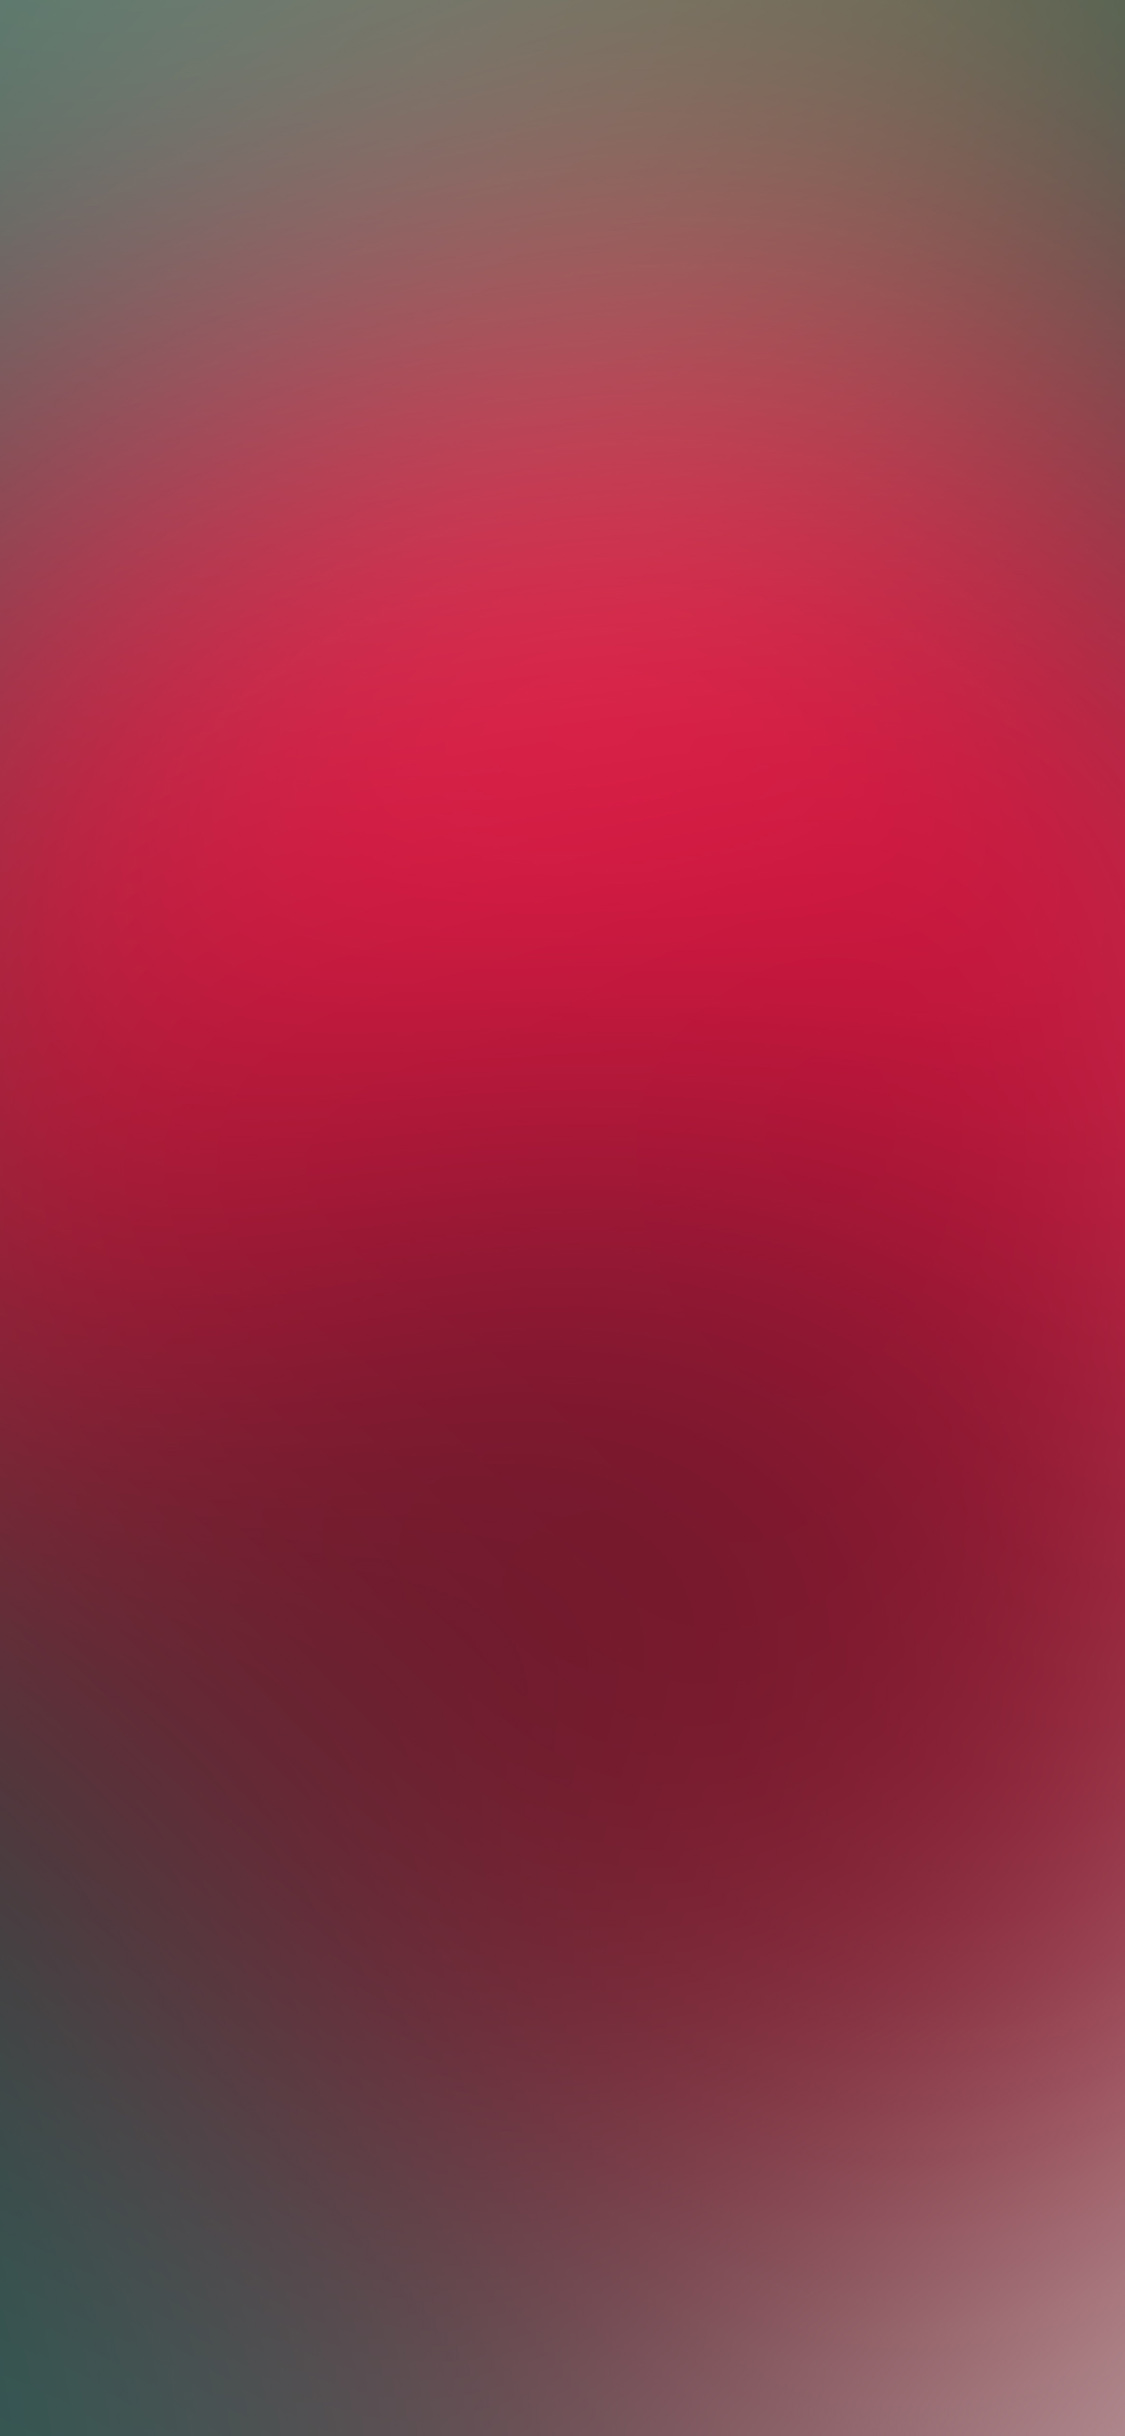 iPhone X wallpaper. red rose drop gradation blur